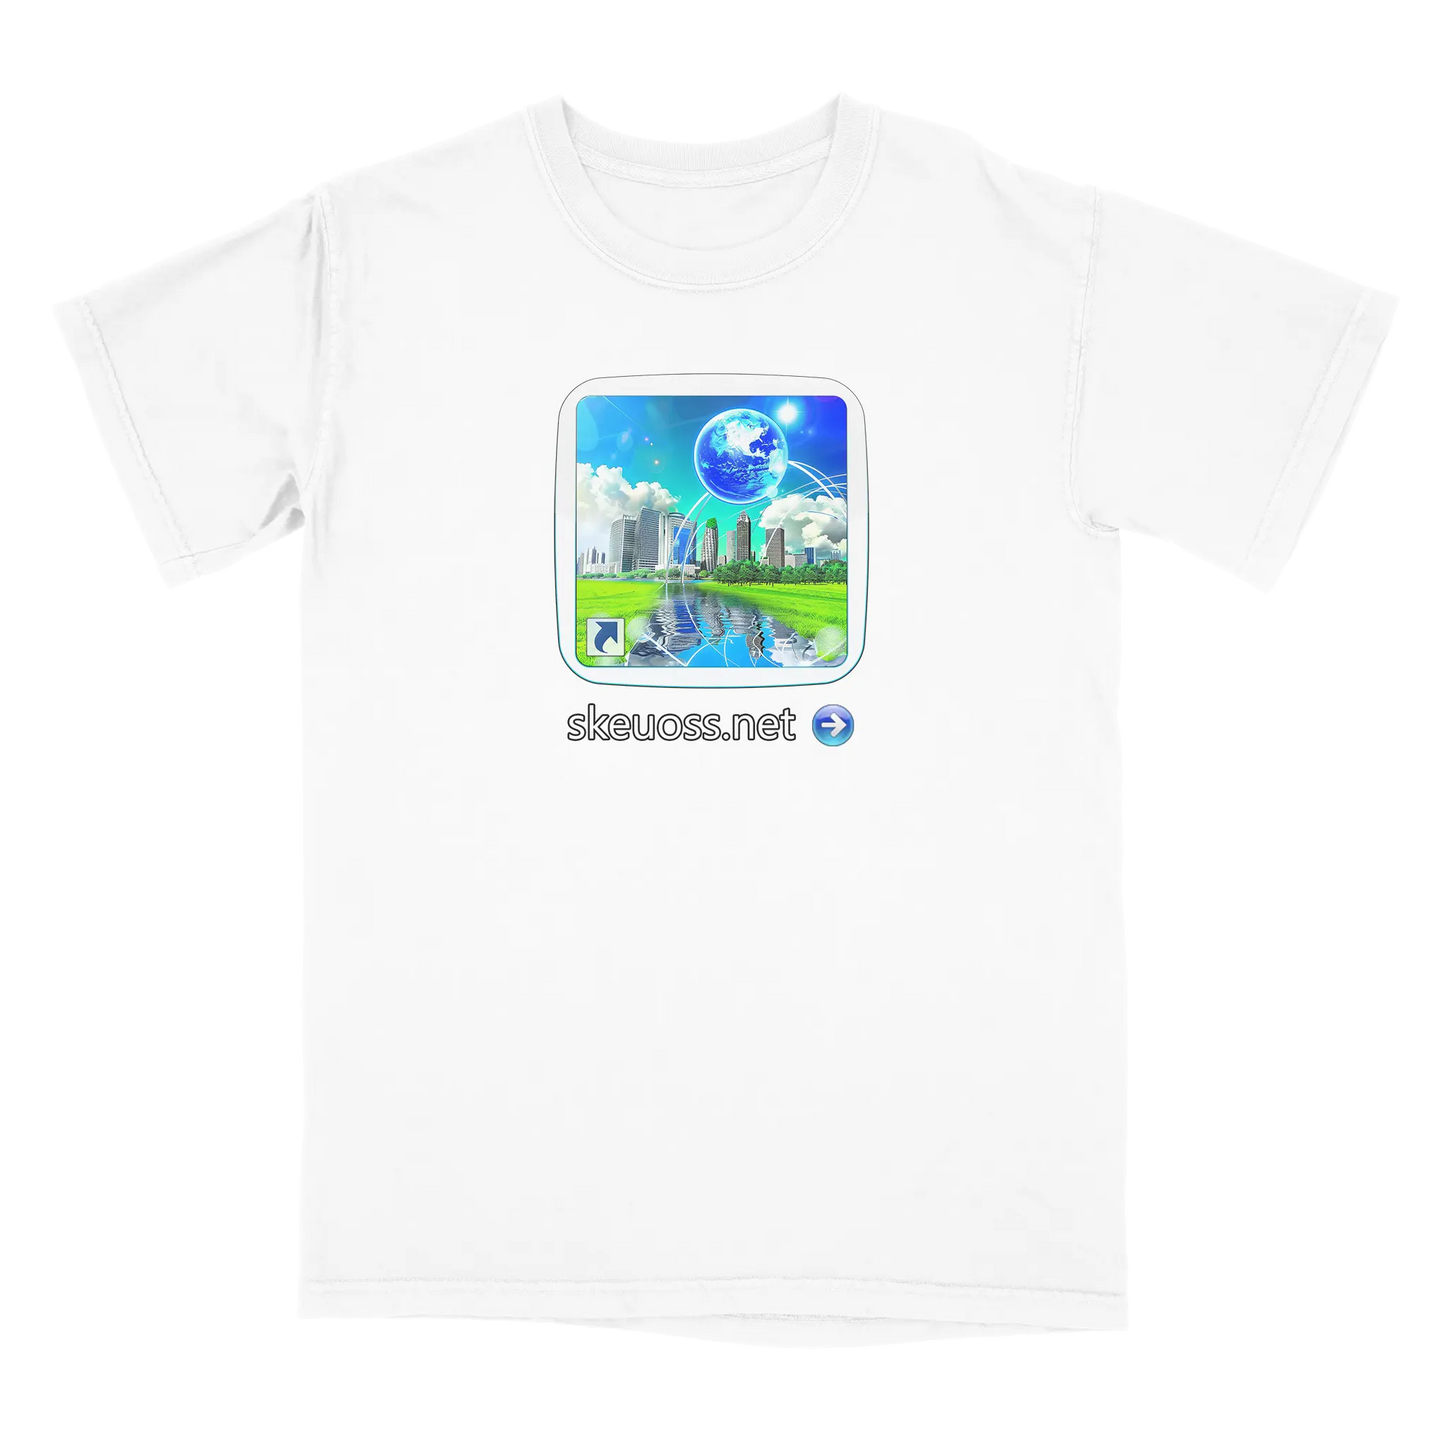 Frutiger Aero T-shirt - User Login Collection - User 393